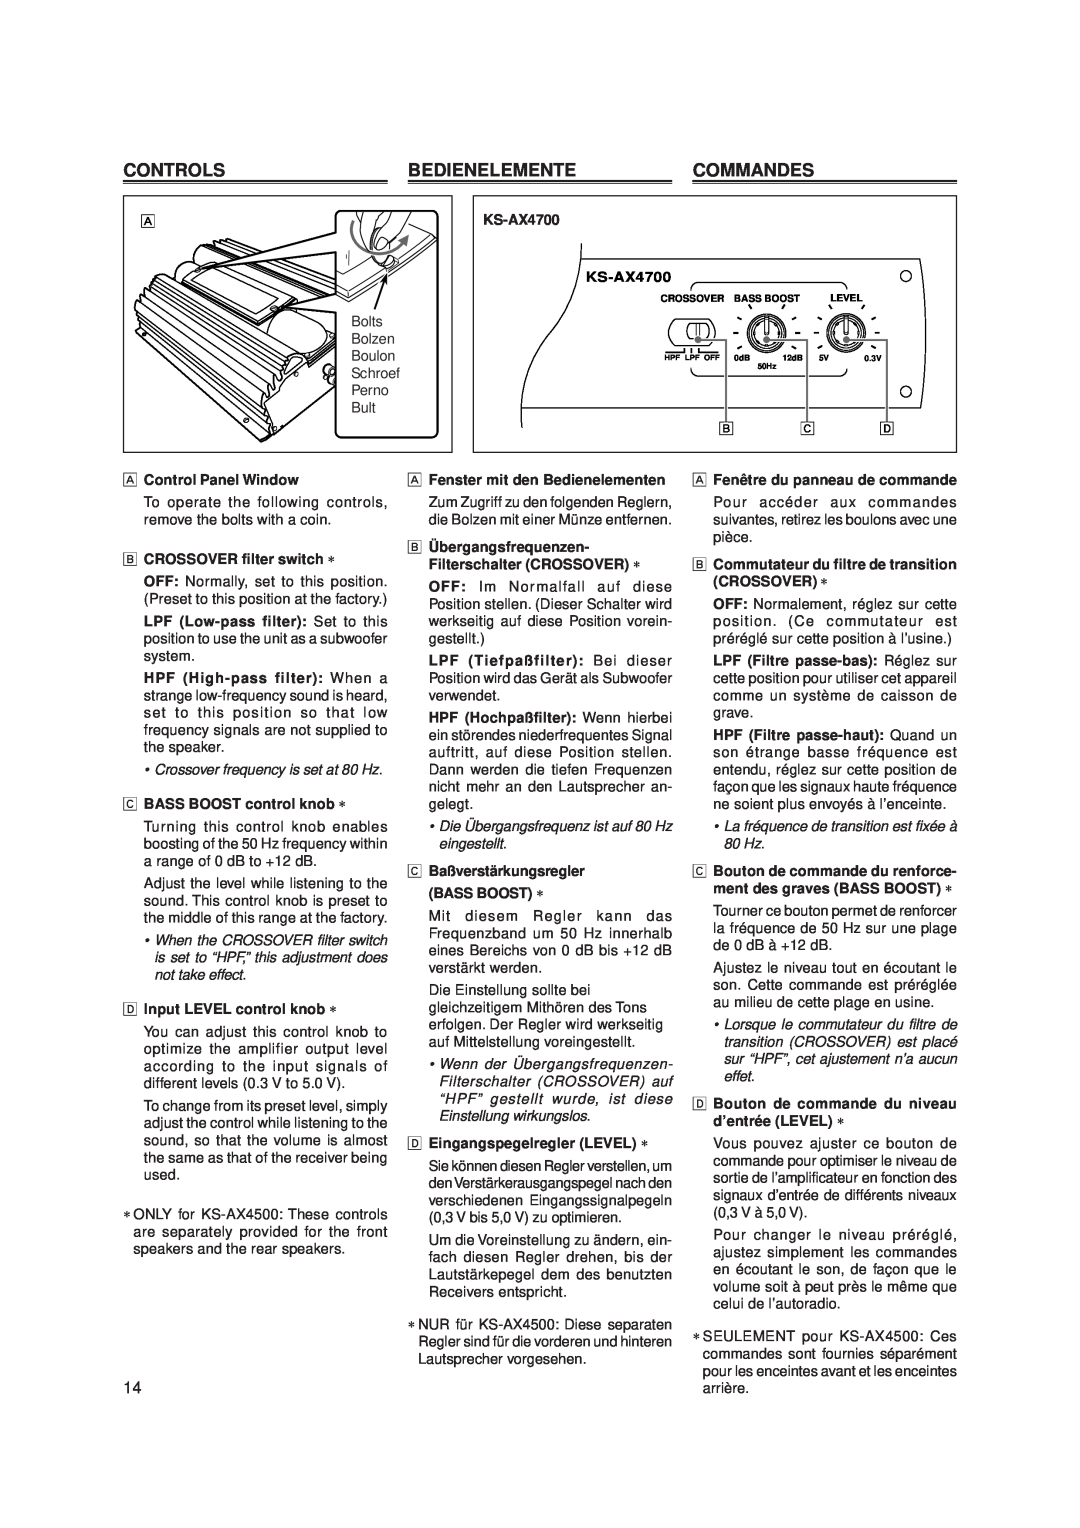 JVC KS-AX4700, KS-AX4500 manual Controls, Bedienelemente, Commandes 